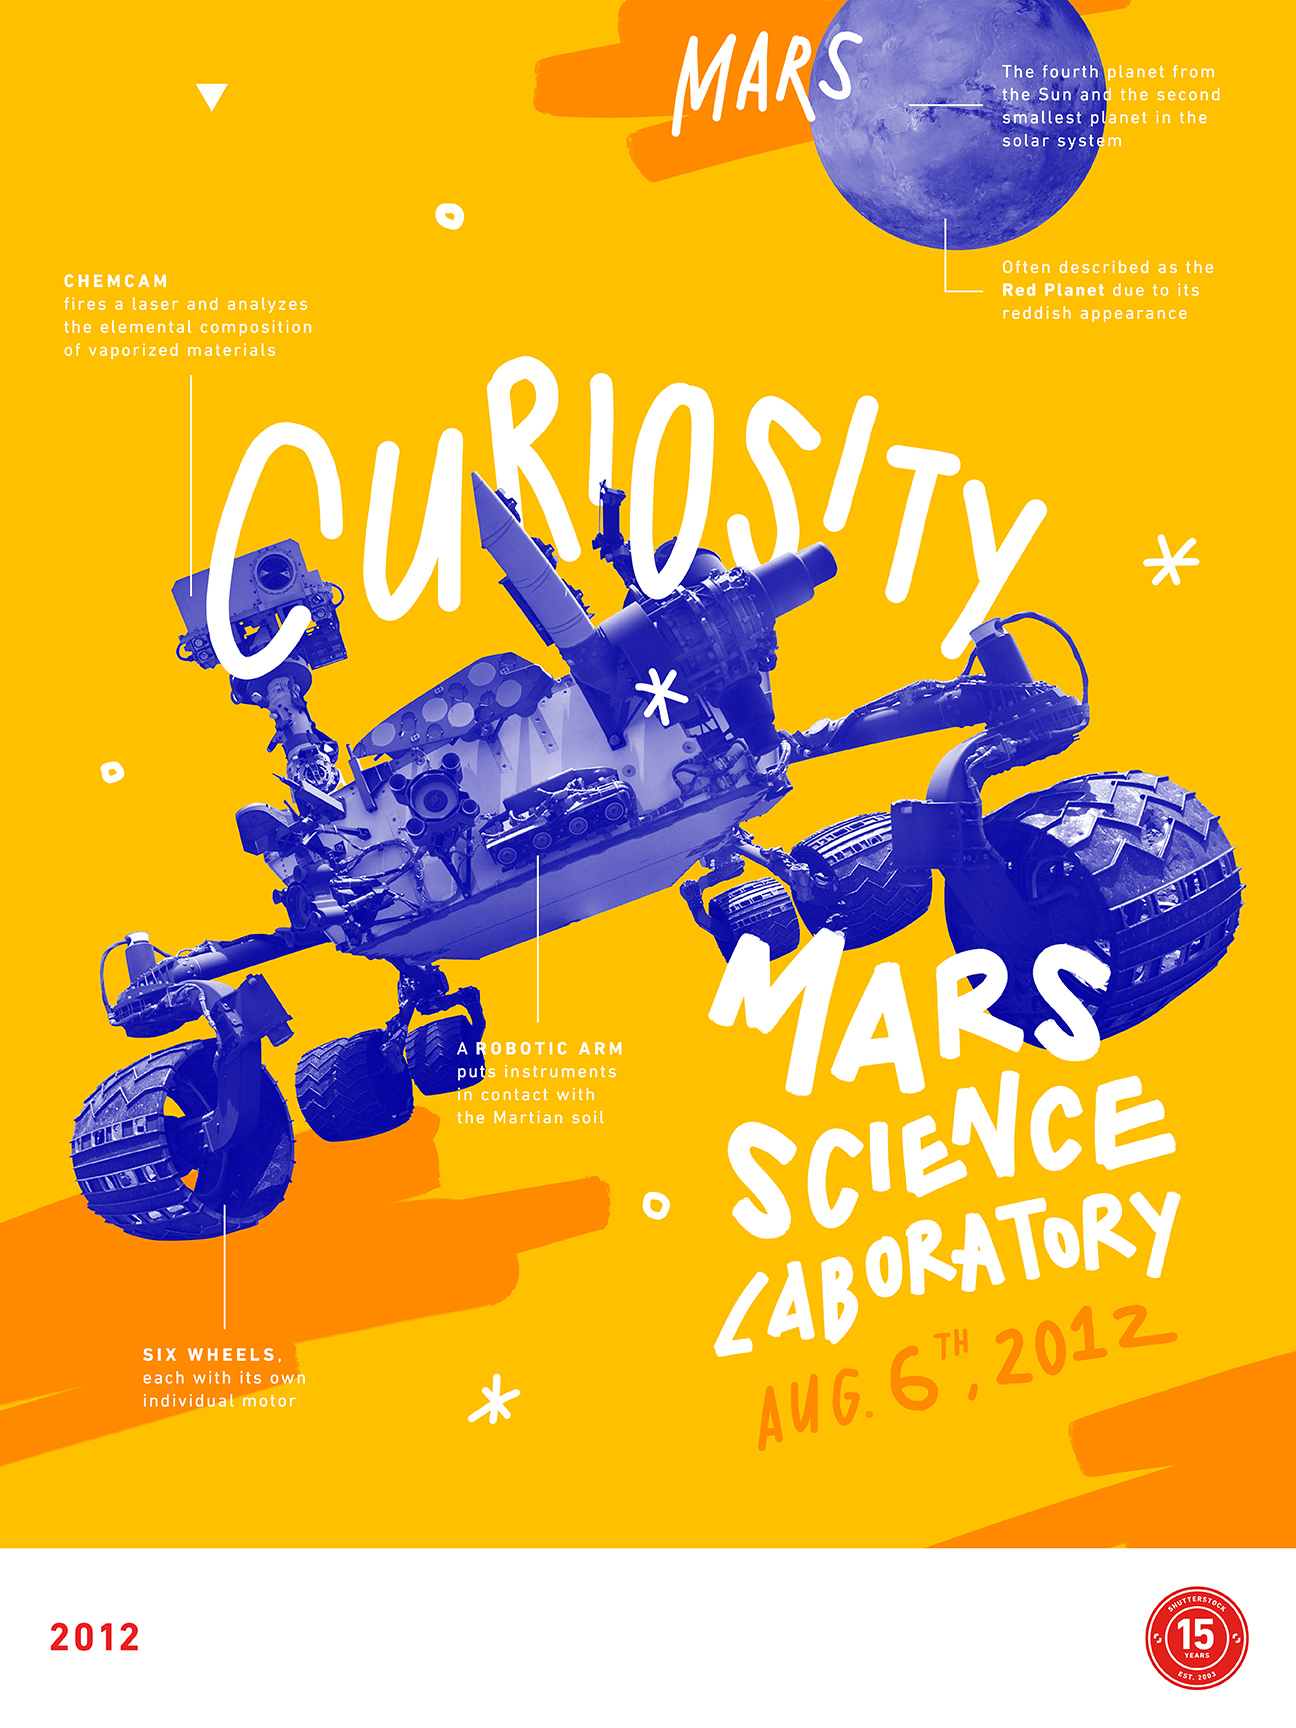 NASA's Curiosity rover lands on Mars